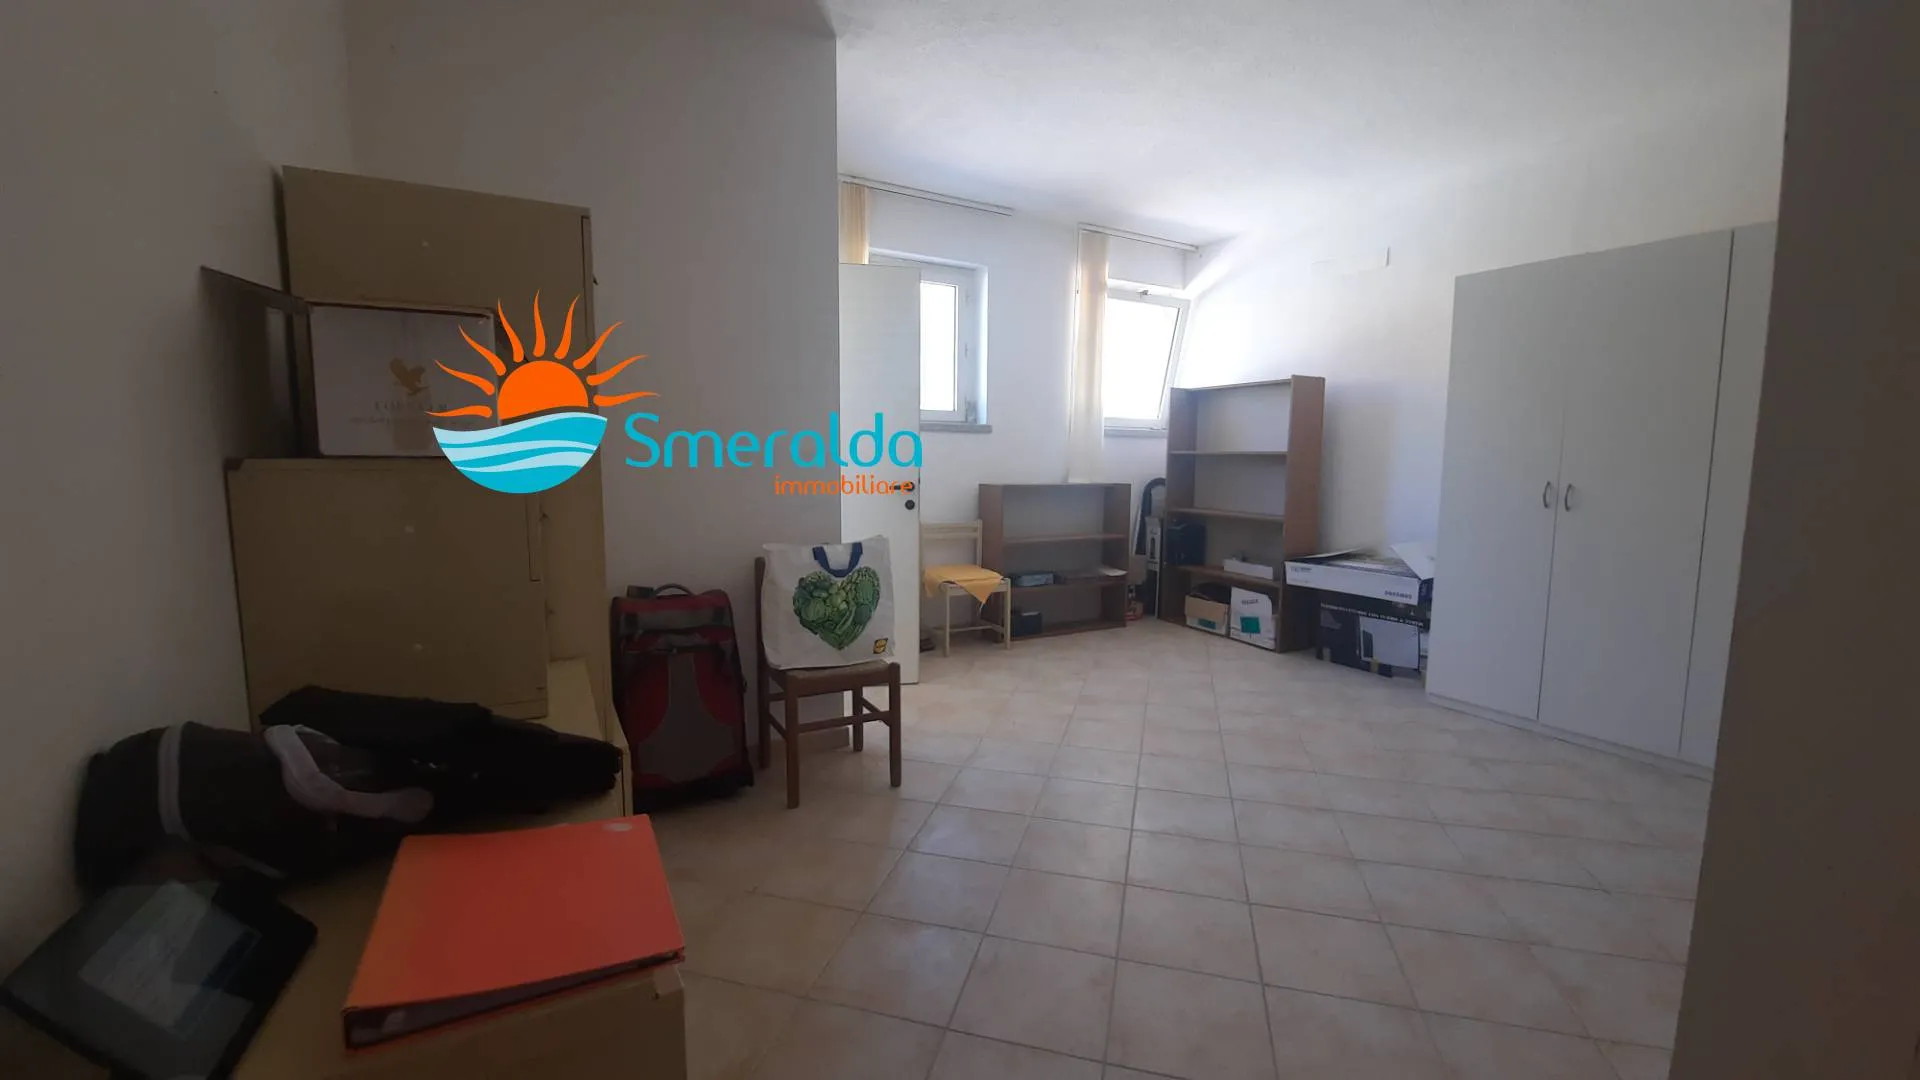 Immagine per Appartamento in vendita a Trinità d'Agultu e Vignola Via Petra Bianca angolo vi Asinara